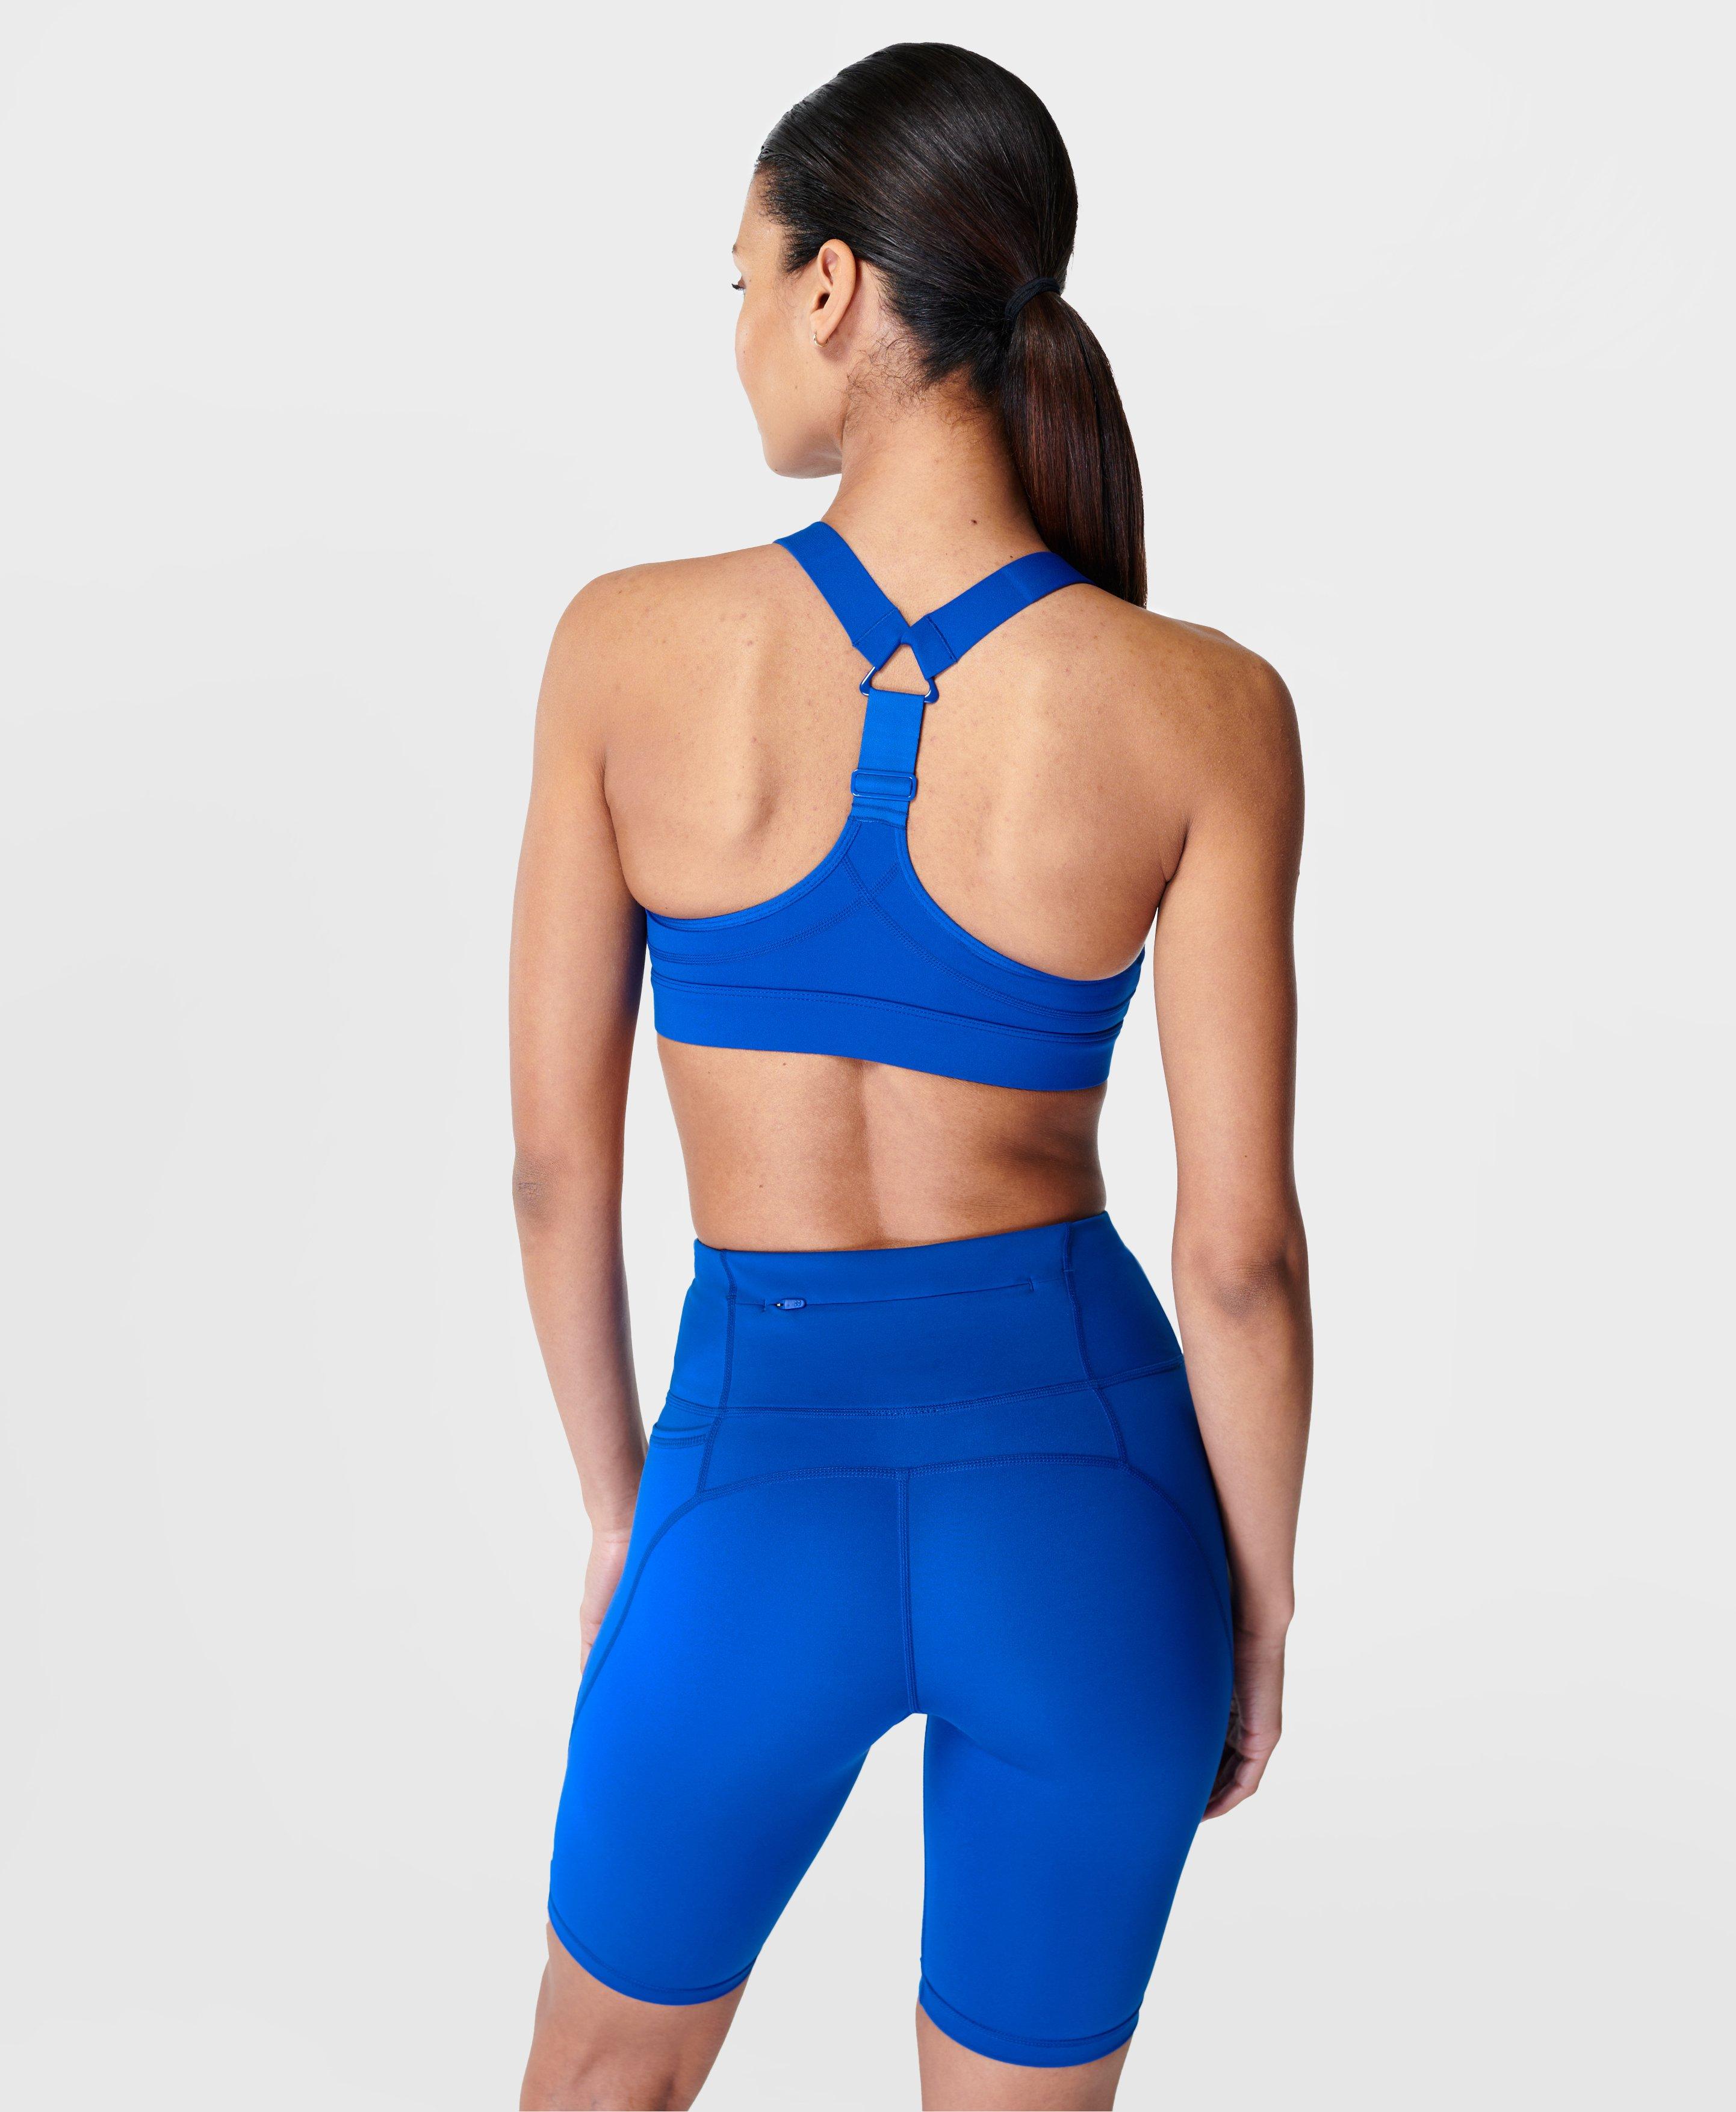 Buy Women Medium Support Fitness Sports Bra - Multi Color Online